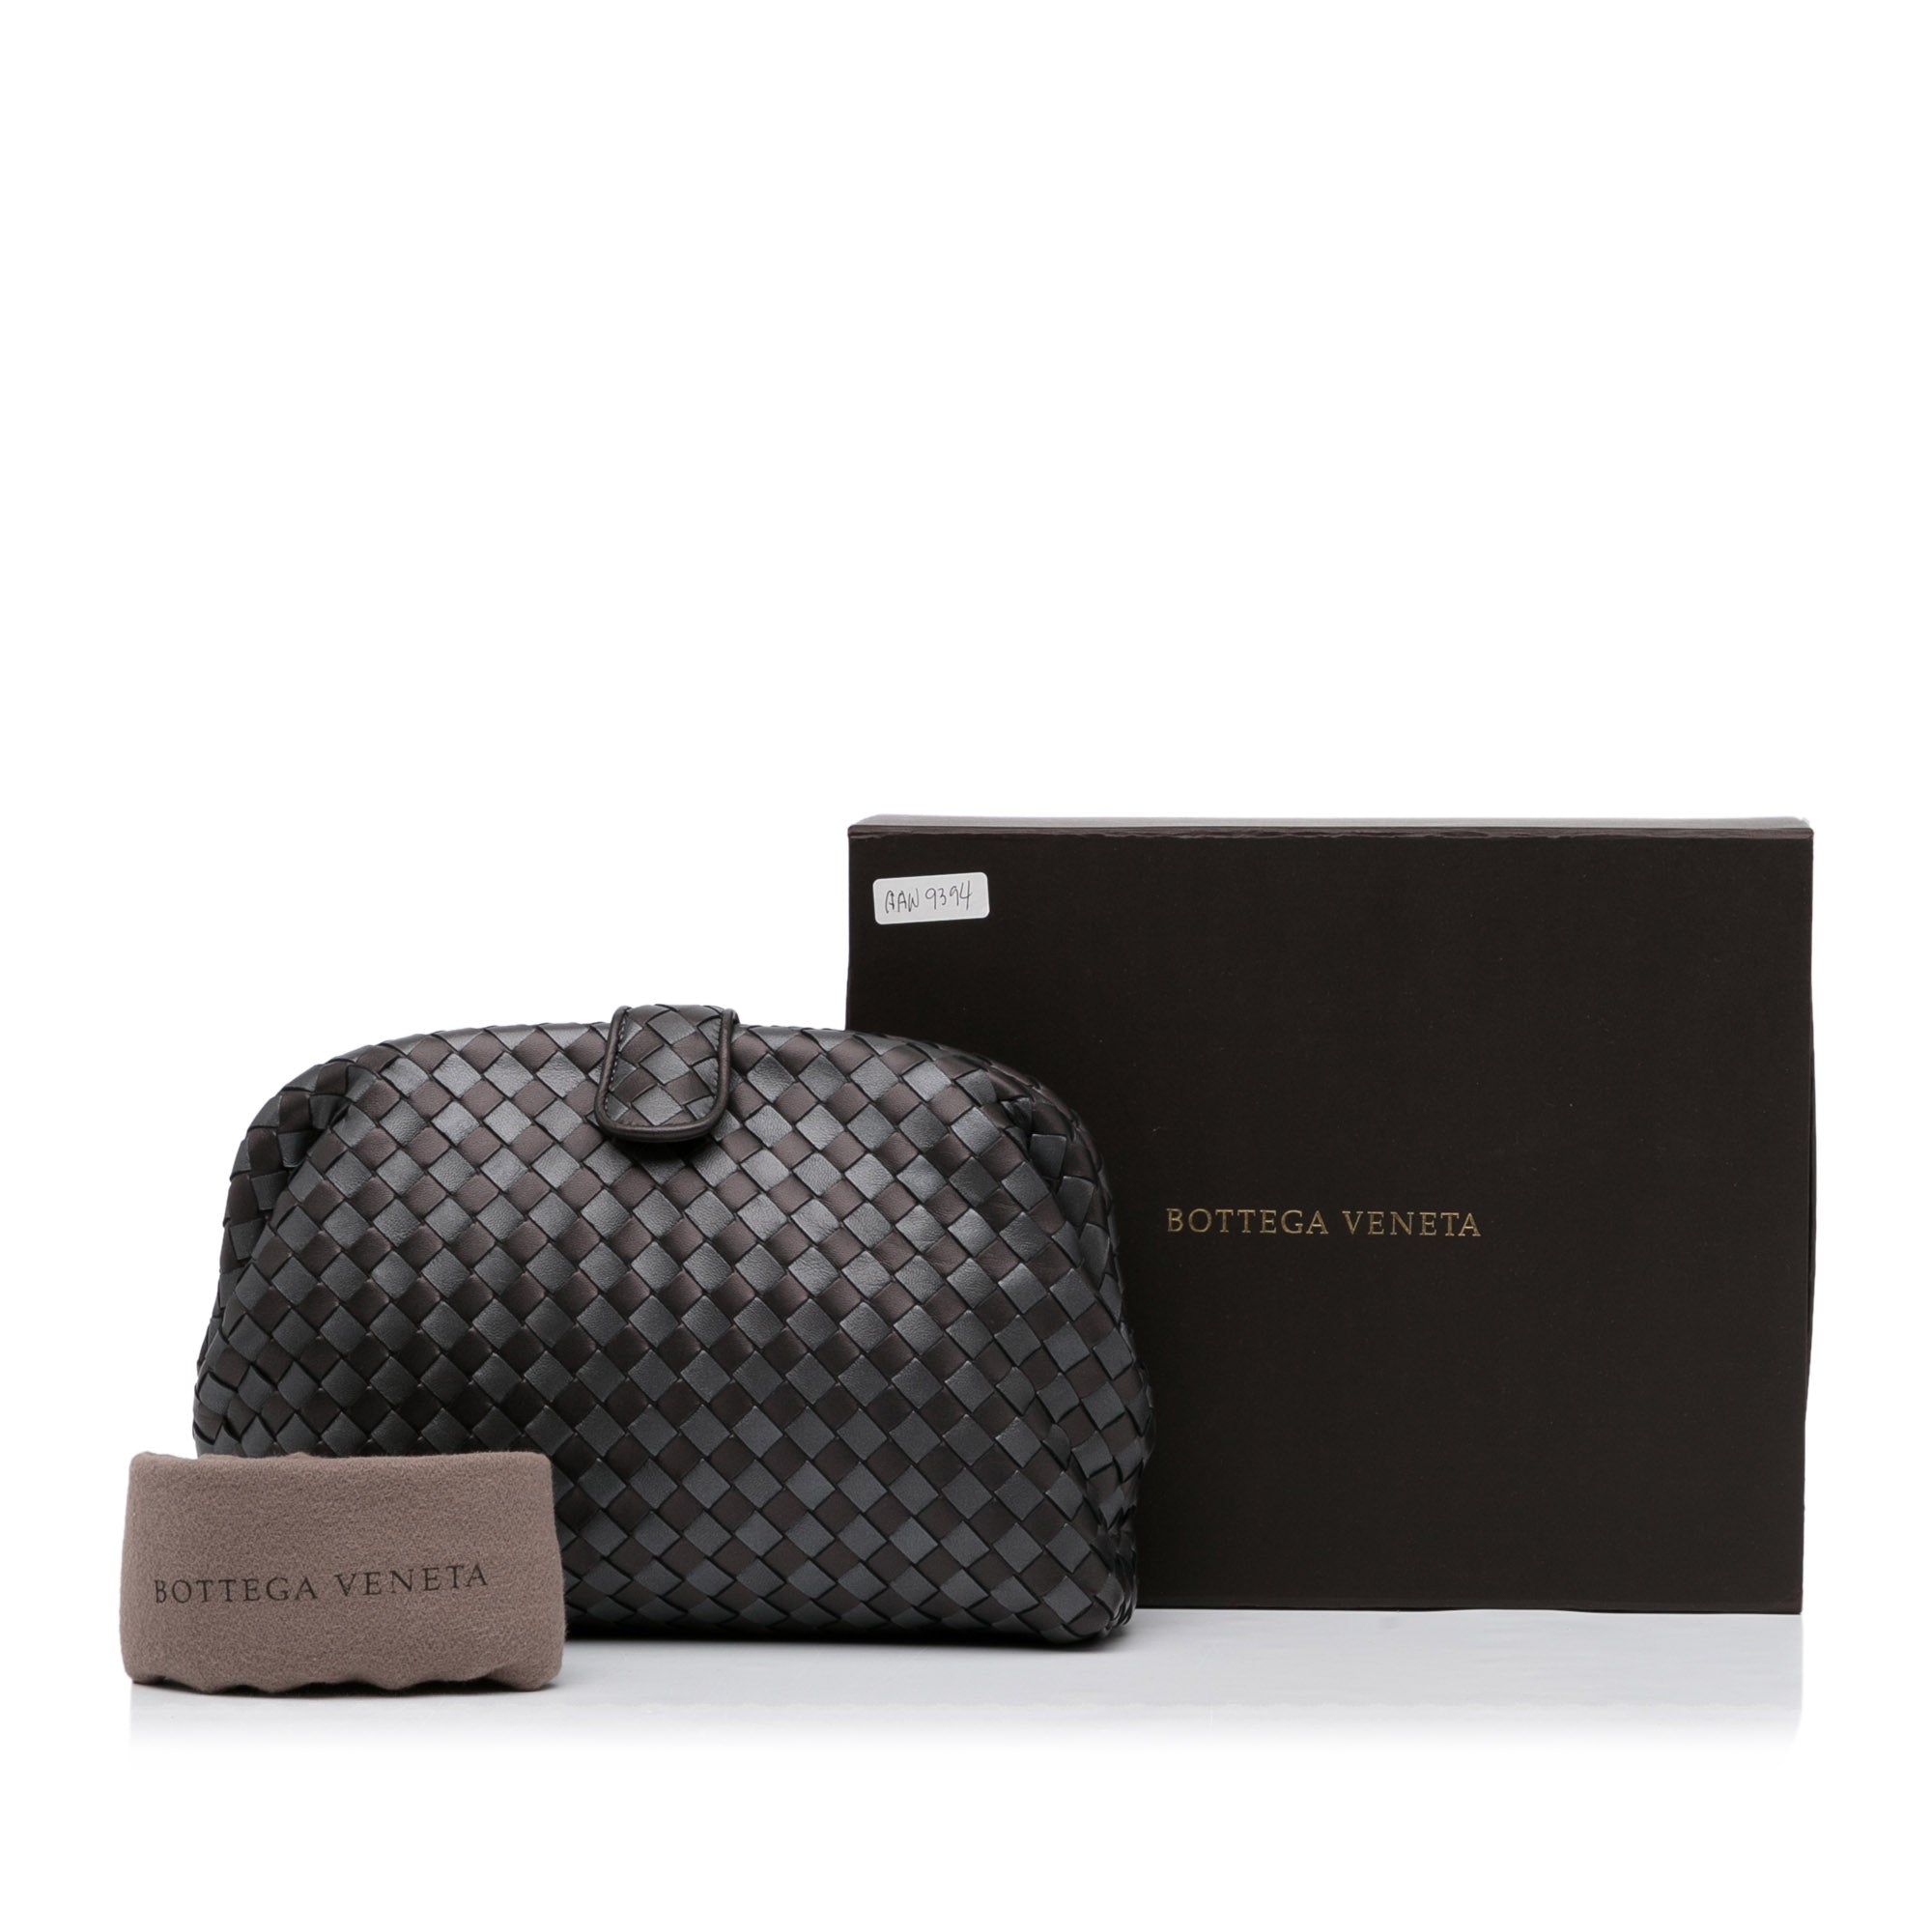 Louis Vuitton Clutch Bag 1980s 